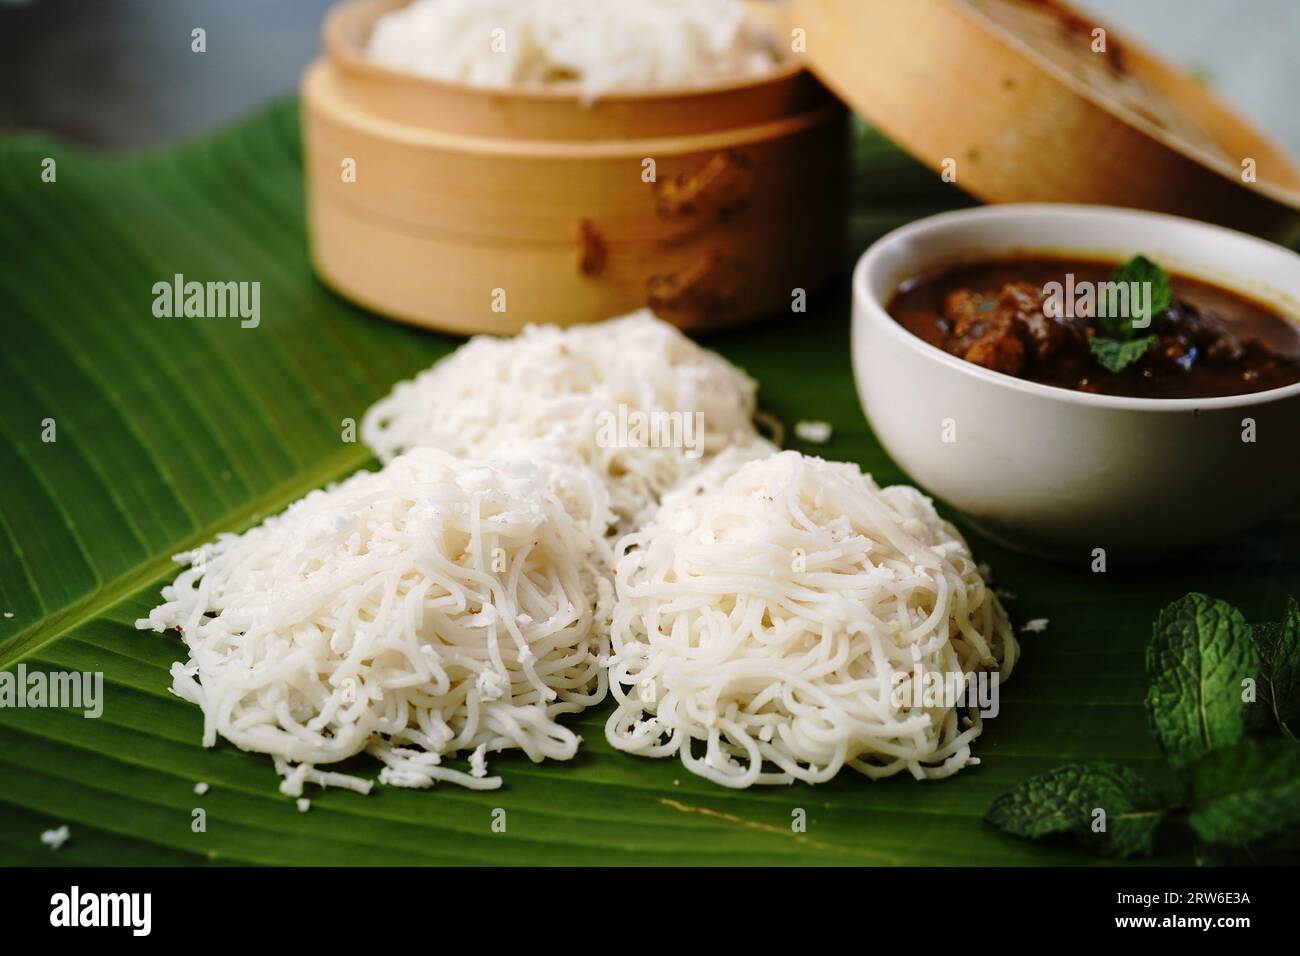 https://c8.alamy.com/comp/2RW6E3A/idiyappam-with-chicken-curry-kerala-steamed-breakfast-made-of-rice-flour-2RW6E3A.jpg